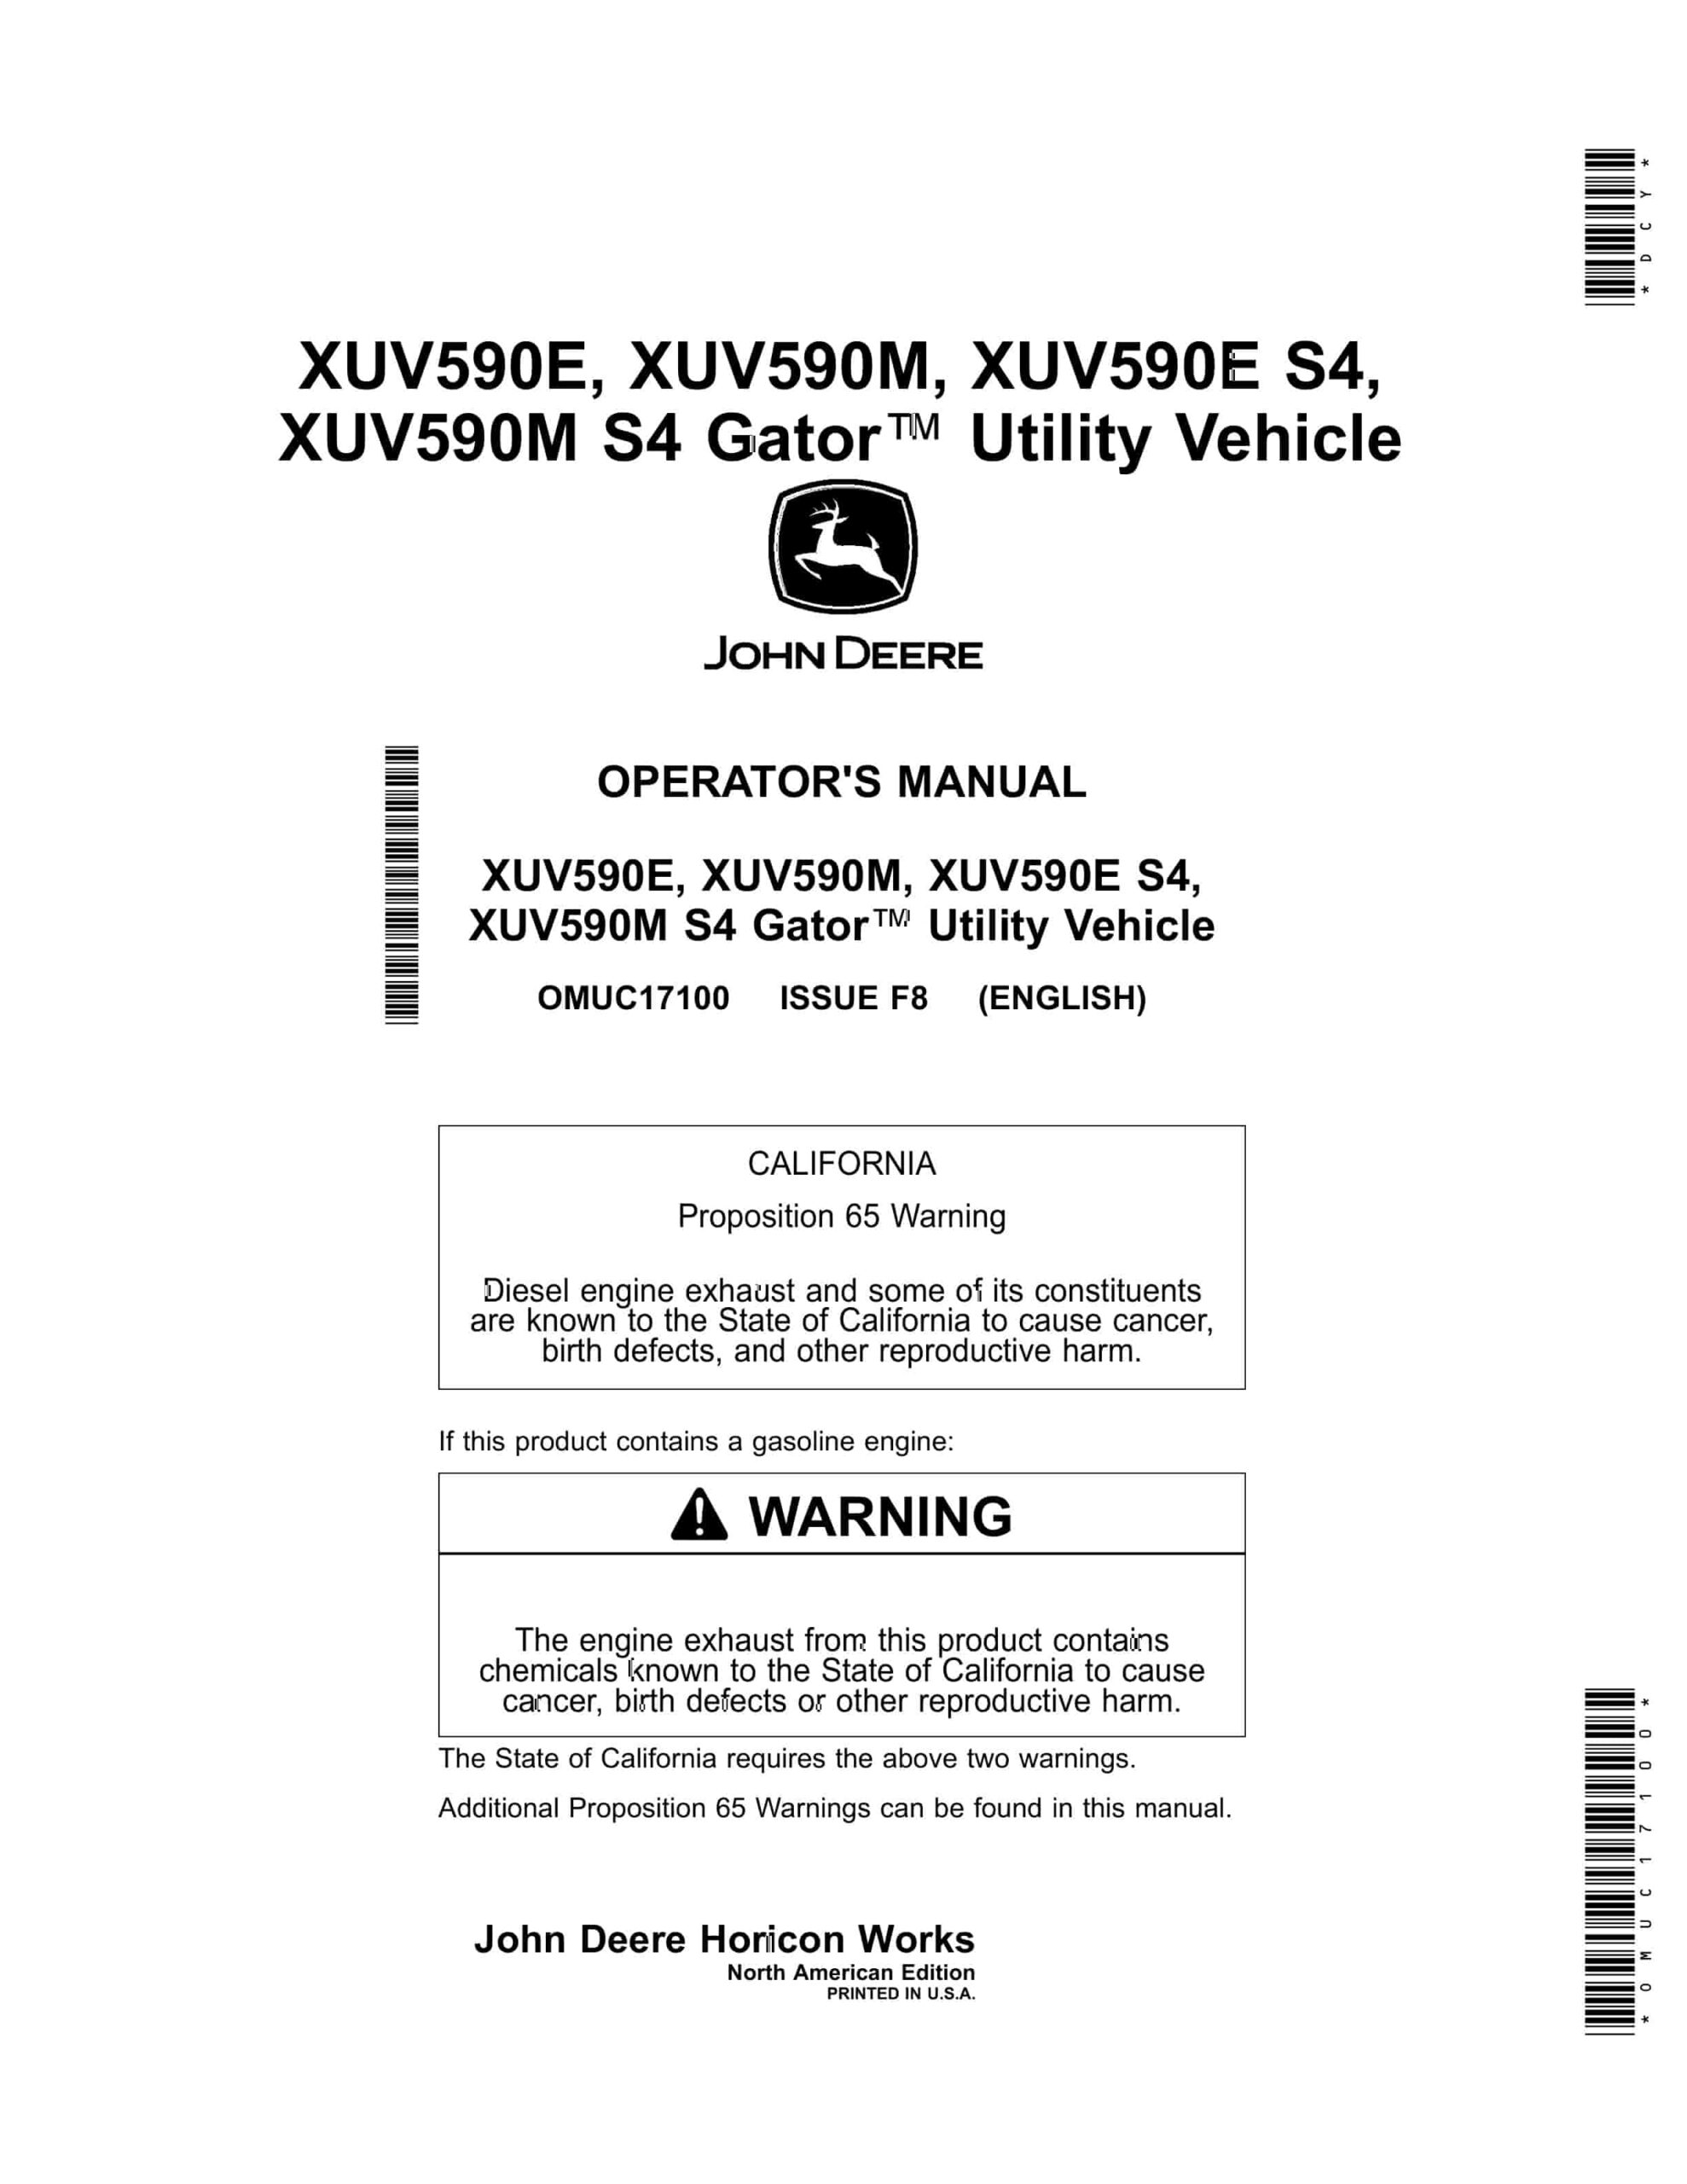 John Deere XUV590E, XUV590M, XUV590E S4, XUV590M S4 Gator Utility Vehicles Operator Manual OMUC17100-1